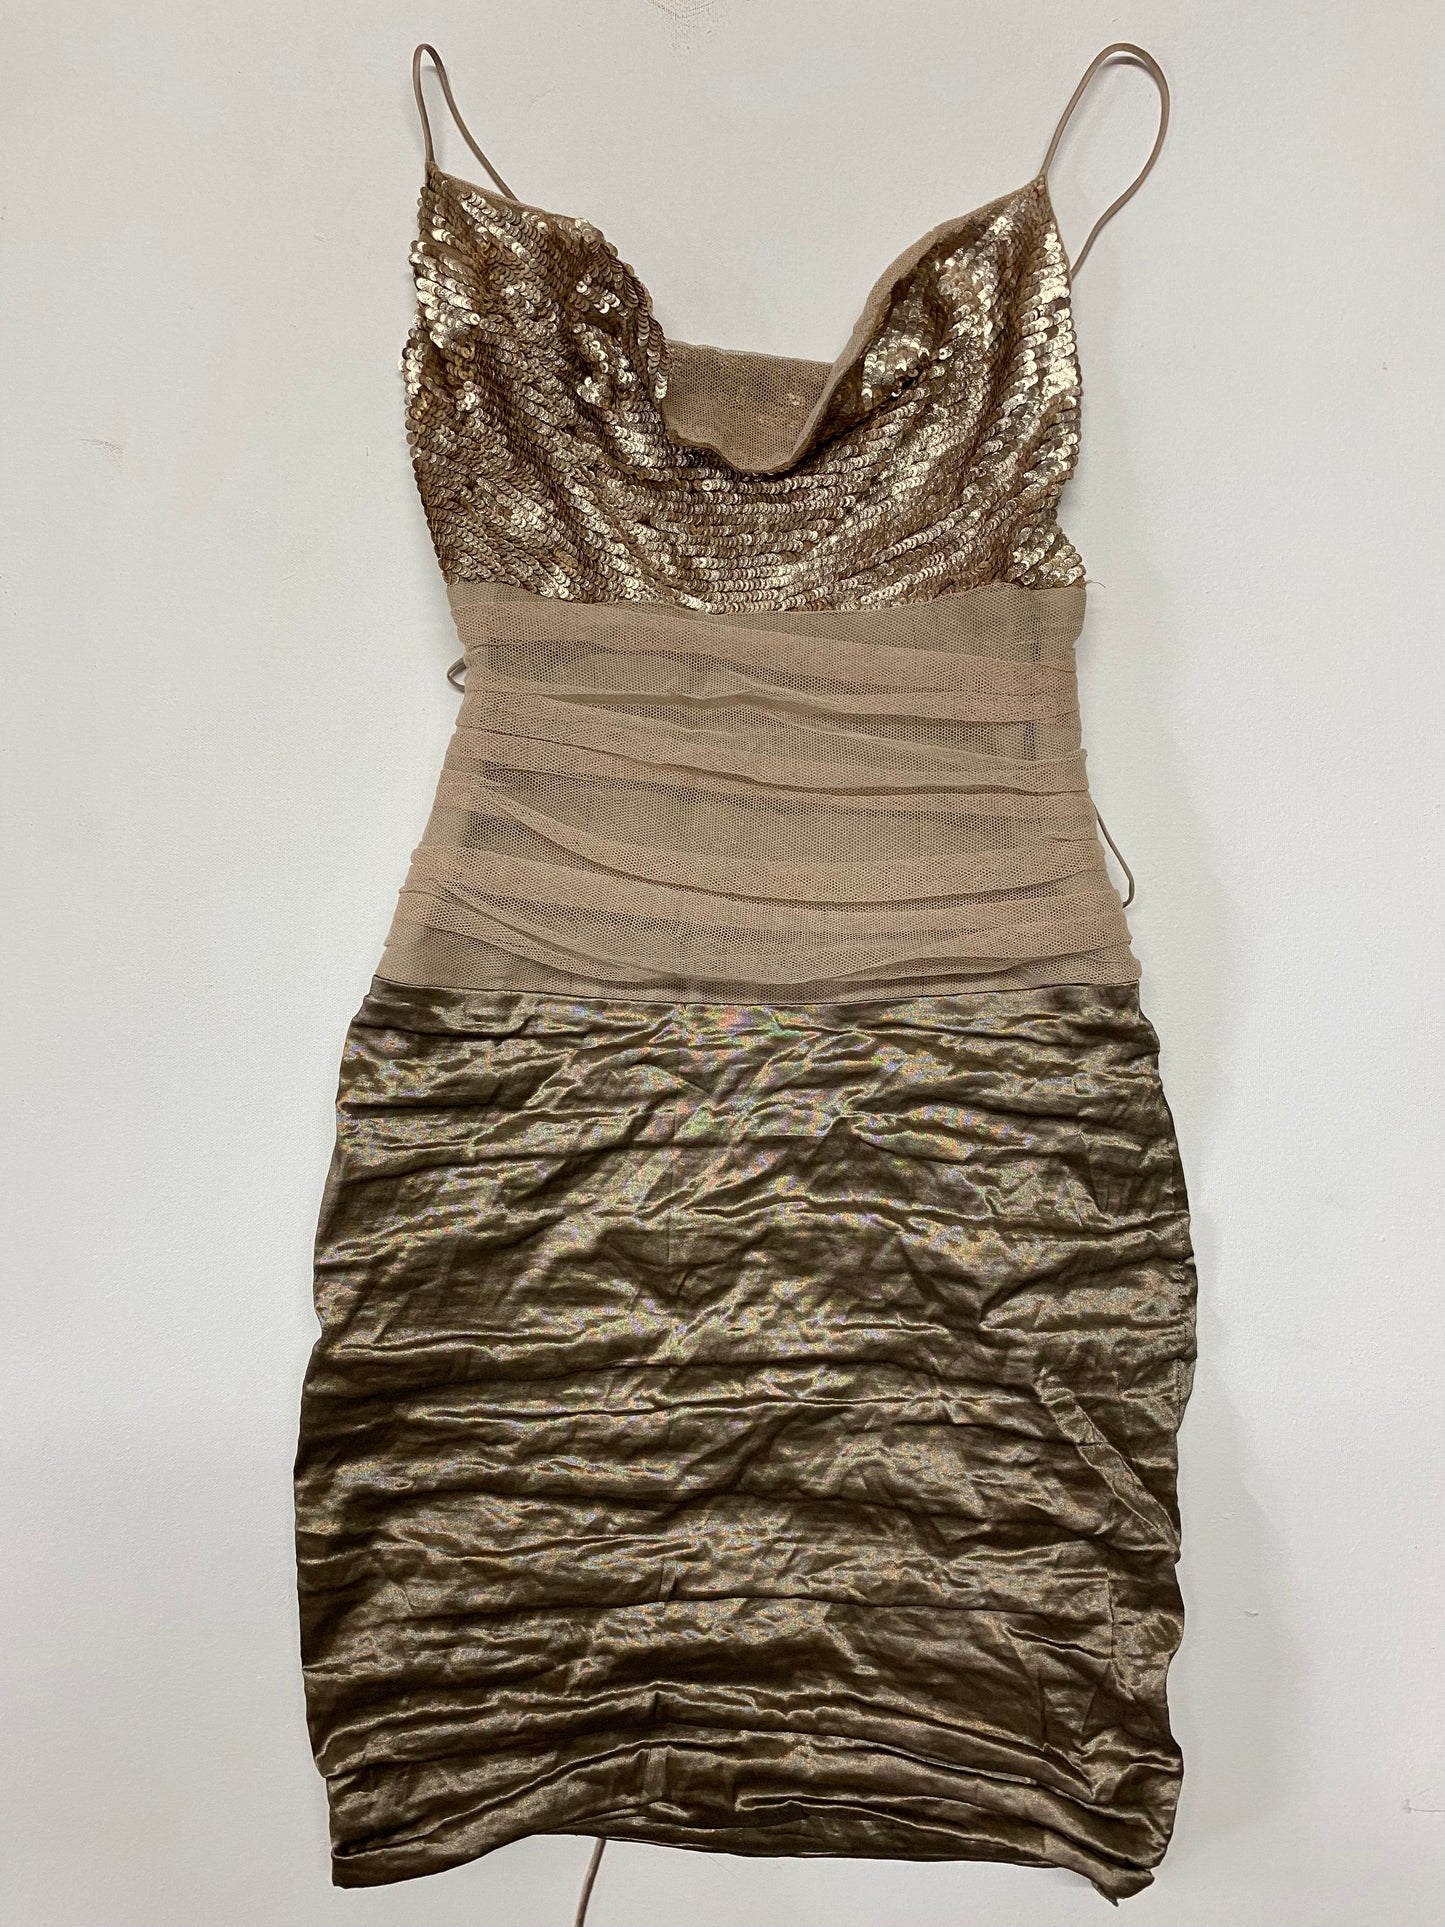 Nicole Miller Strappy Champagne Sequin Bodycon Dress Size 2